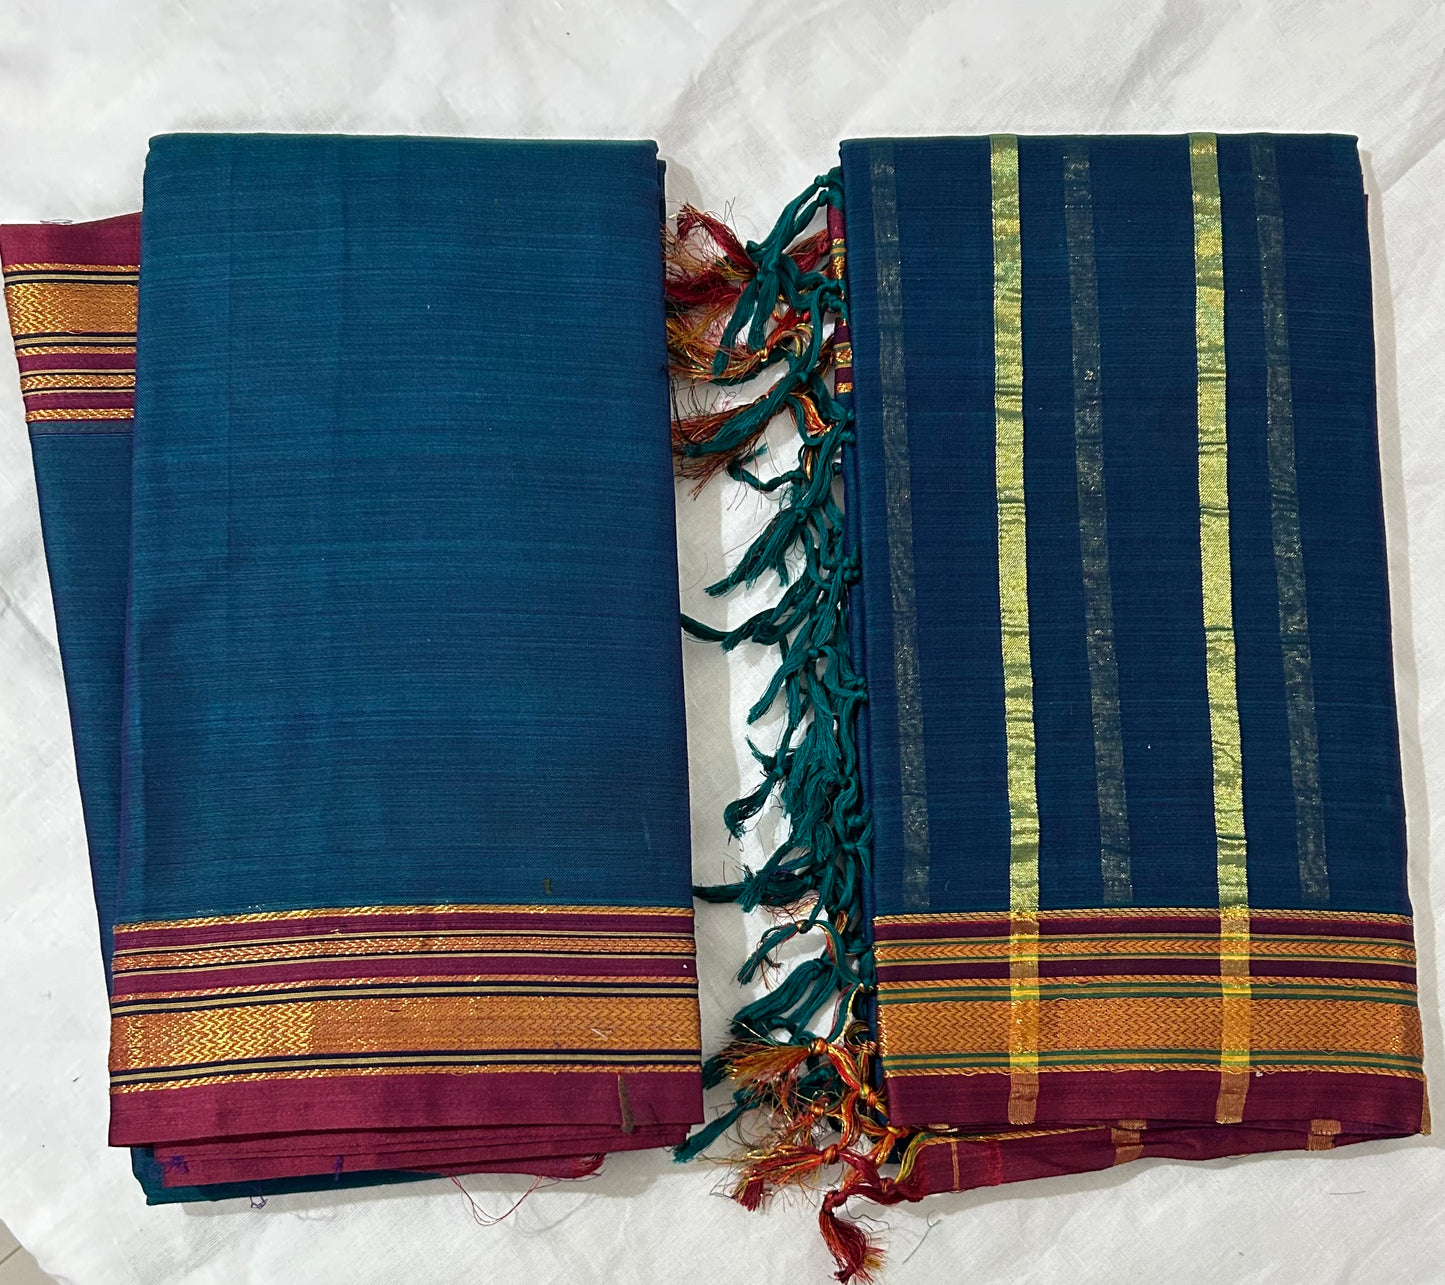 Narayanpet Cotton Dress Material